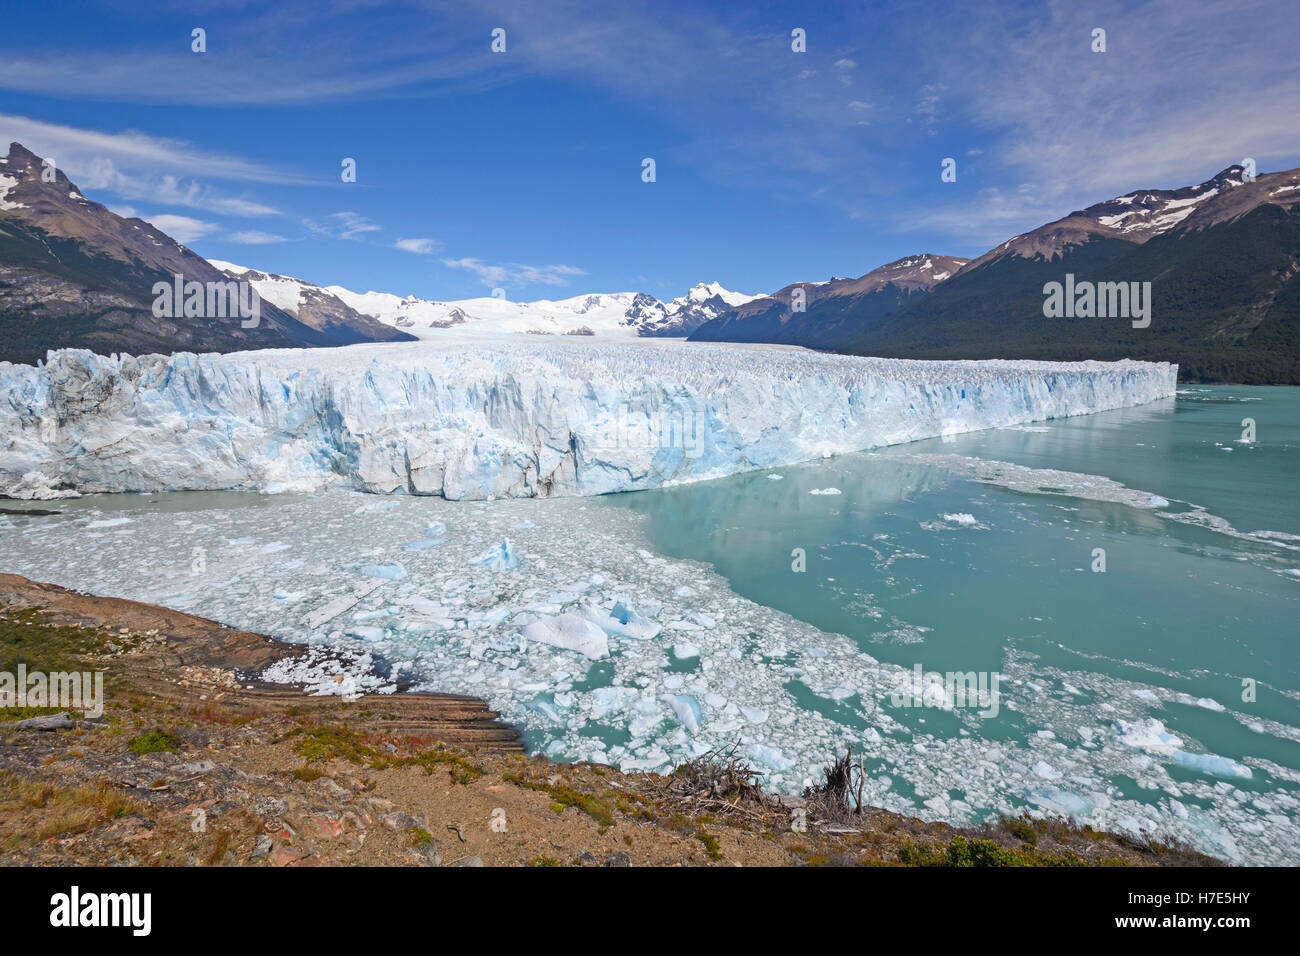 Vista panorámica de un glaciar alpino Foto de stock